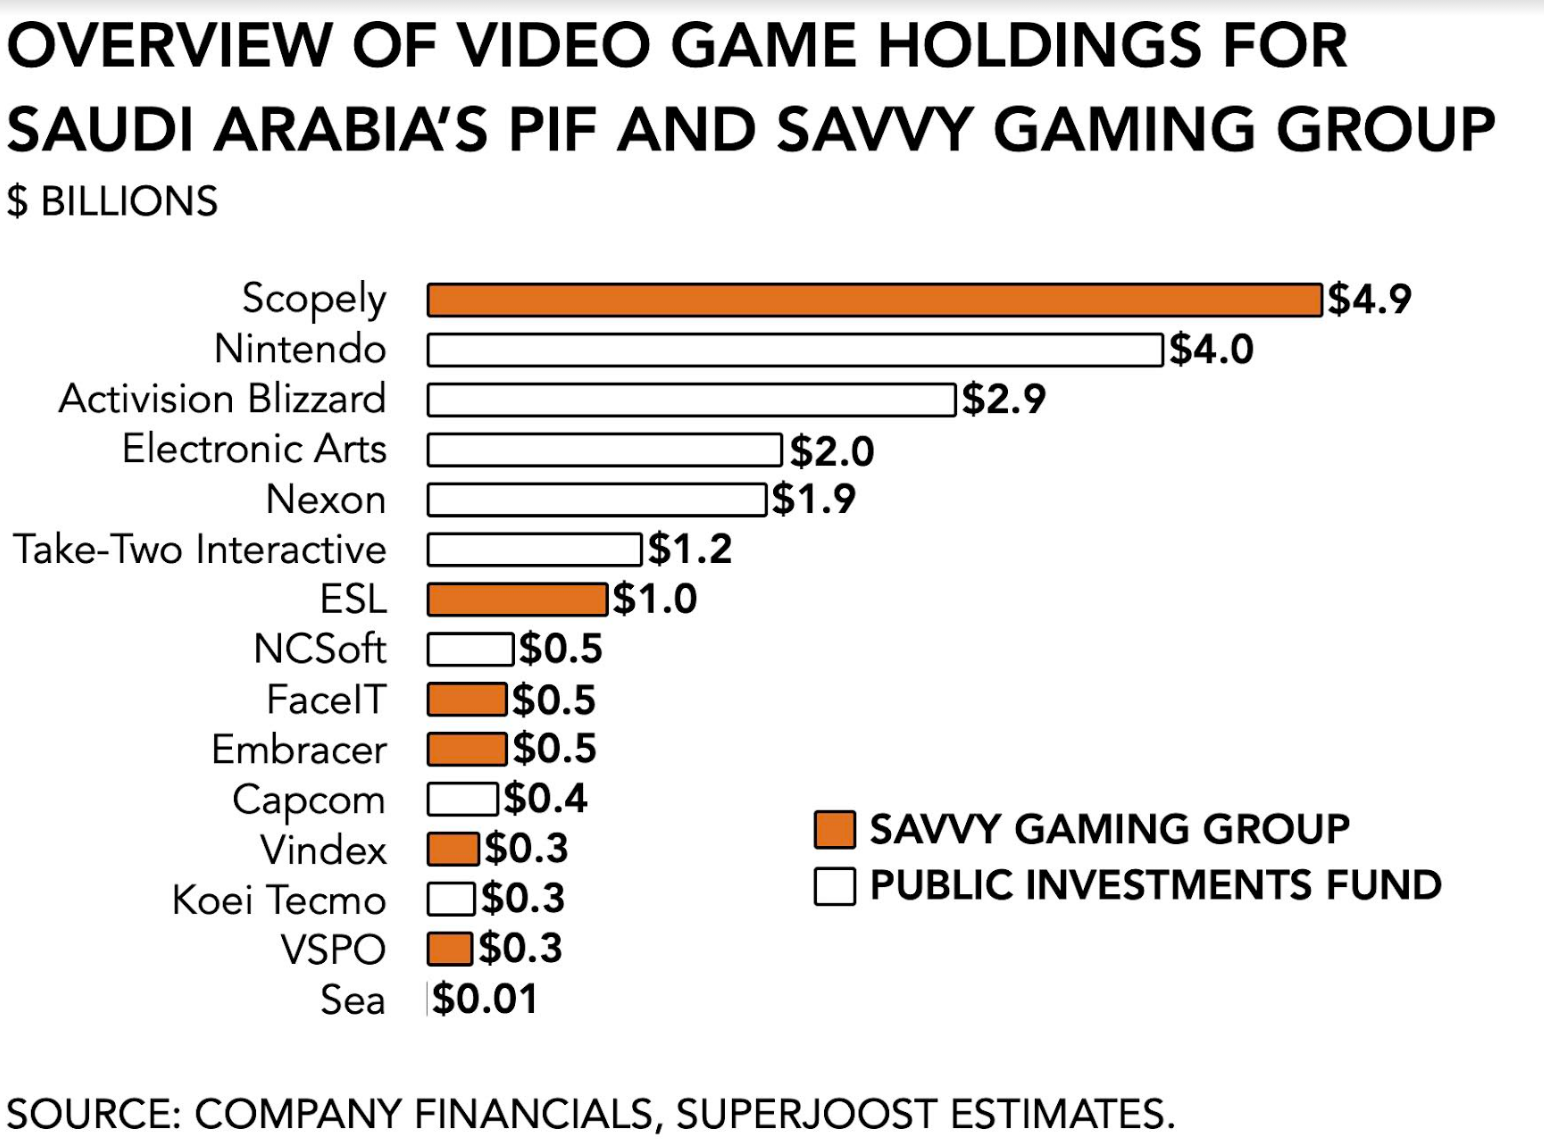 Value of Saudi Arabia’s video game holdings